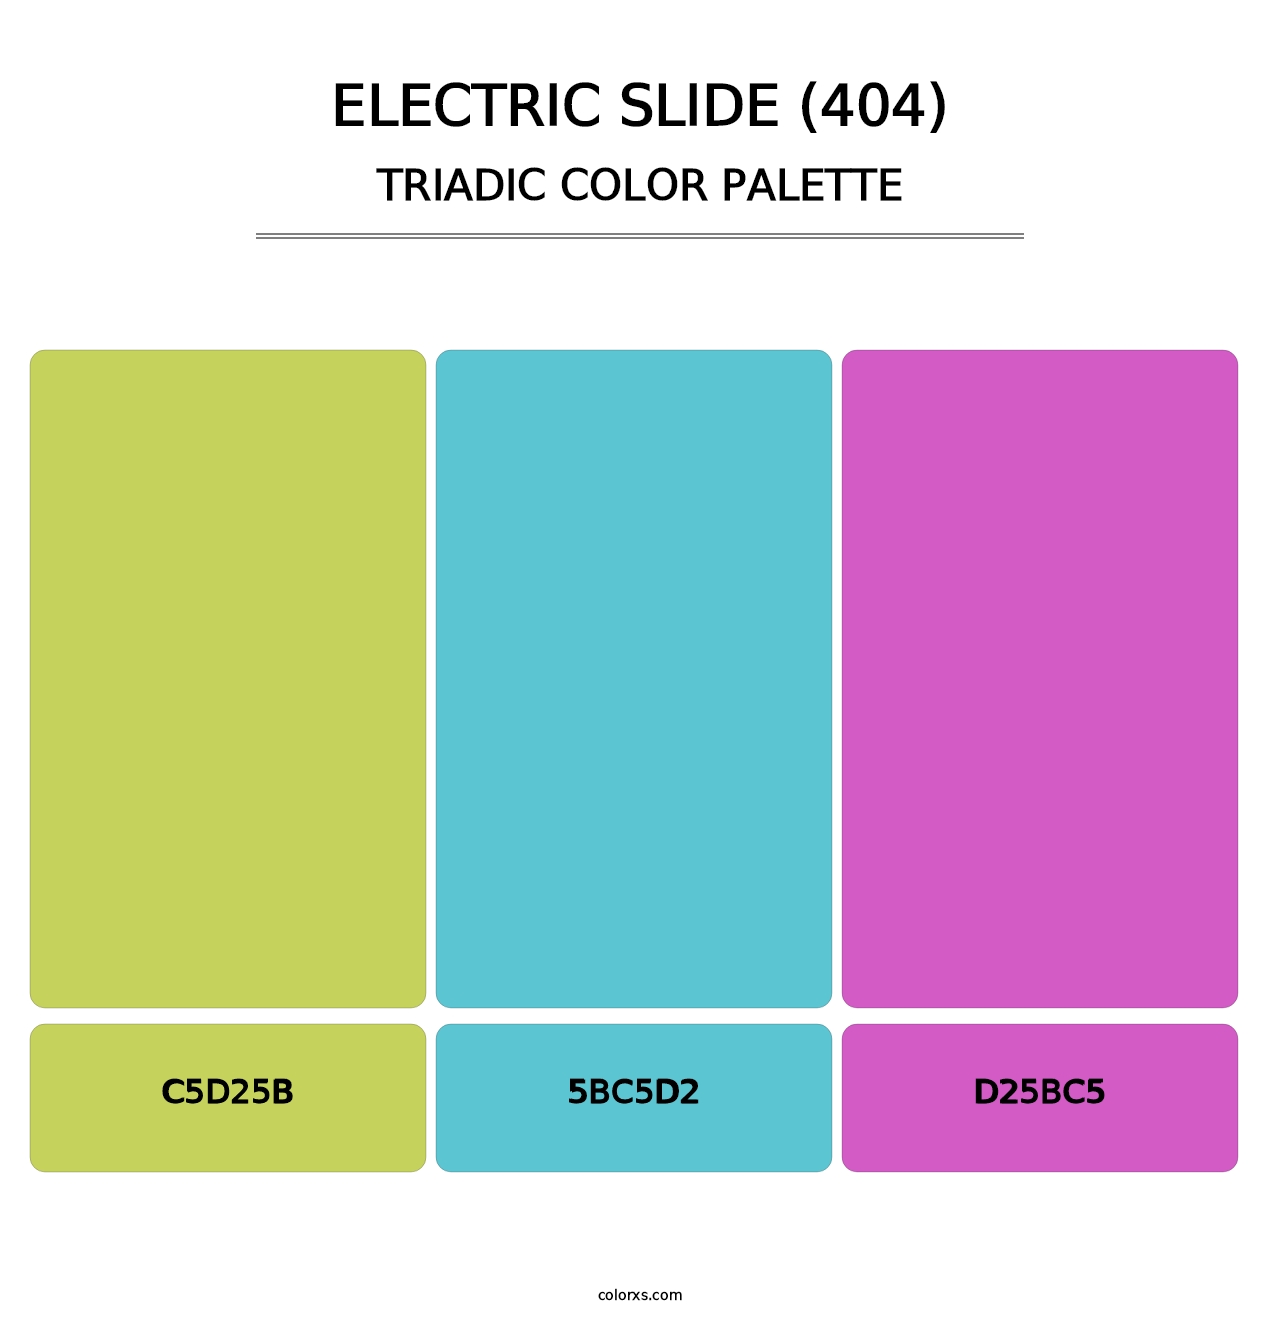 Electric Slide (404) - Triadic Color Palette